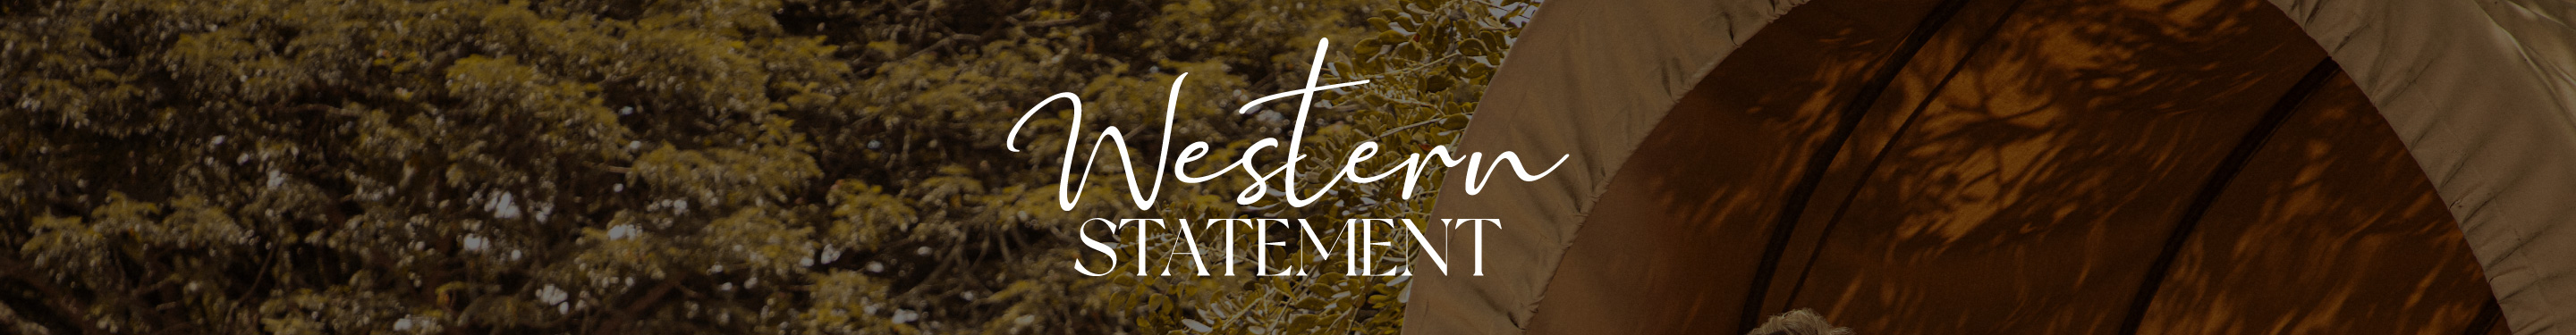 Western Statement | Studio F